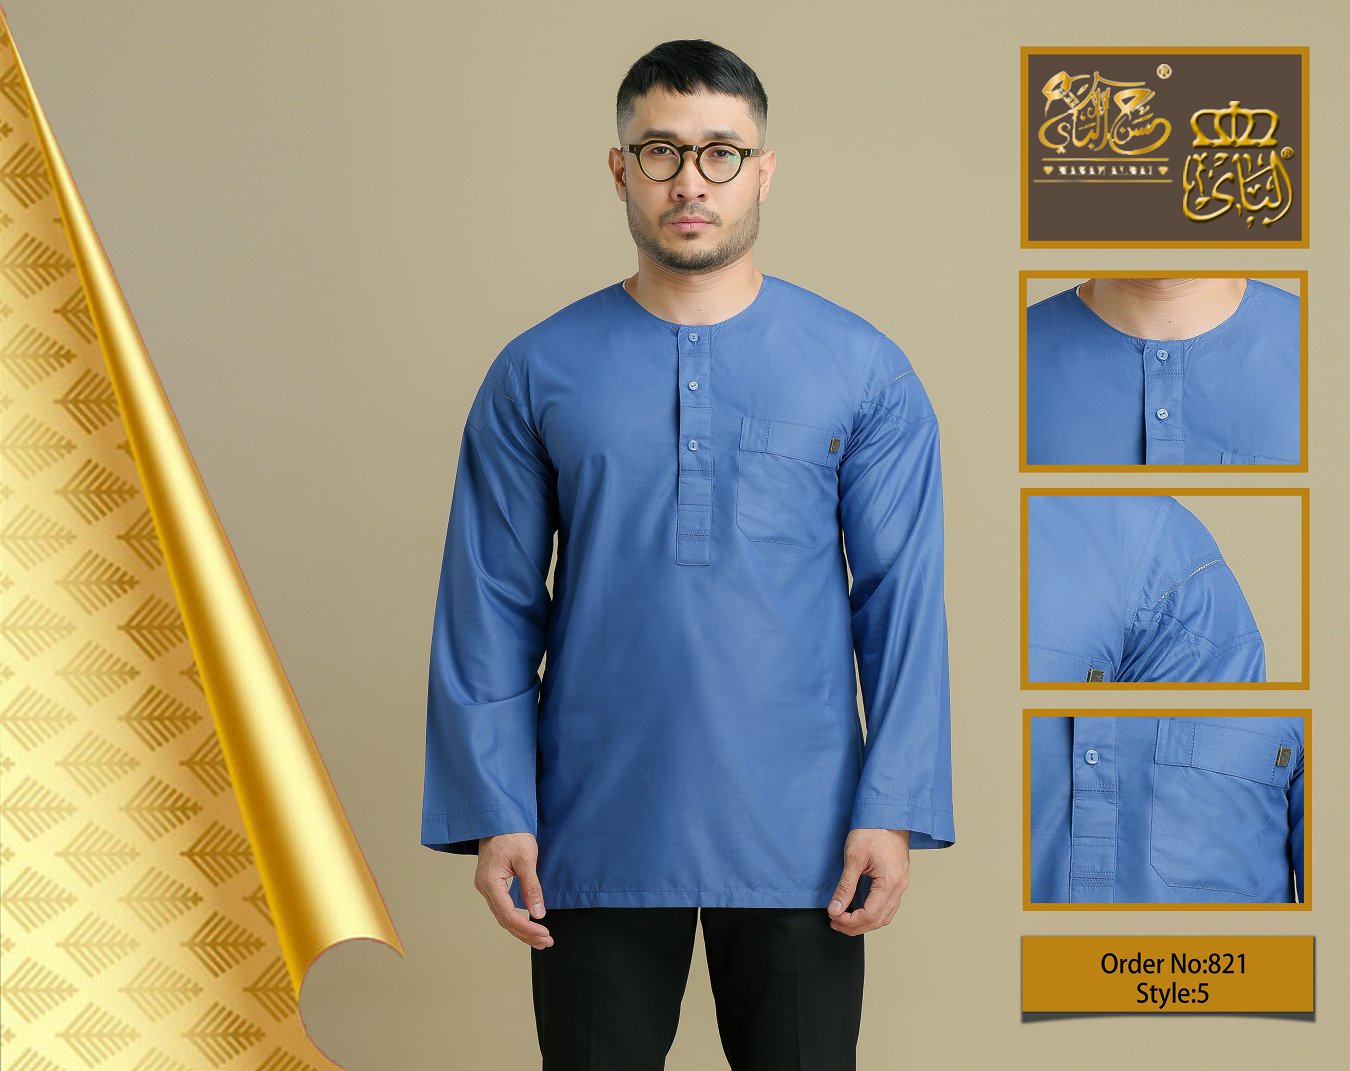 Malay clothing53